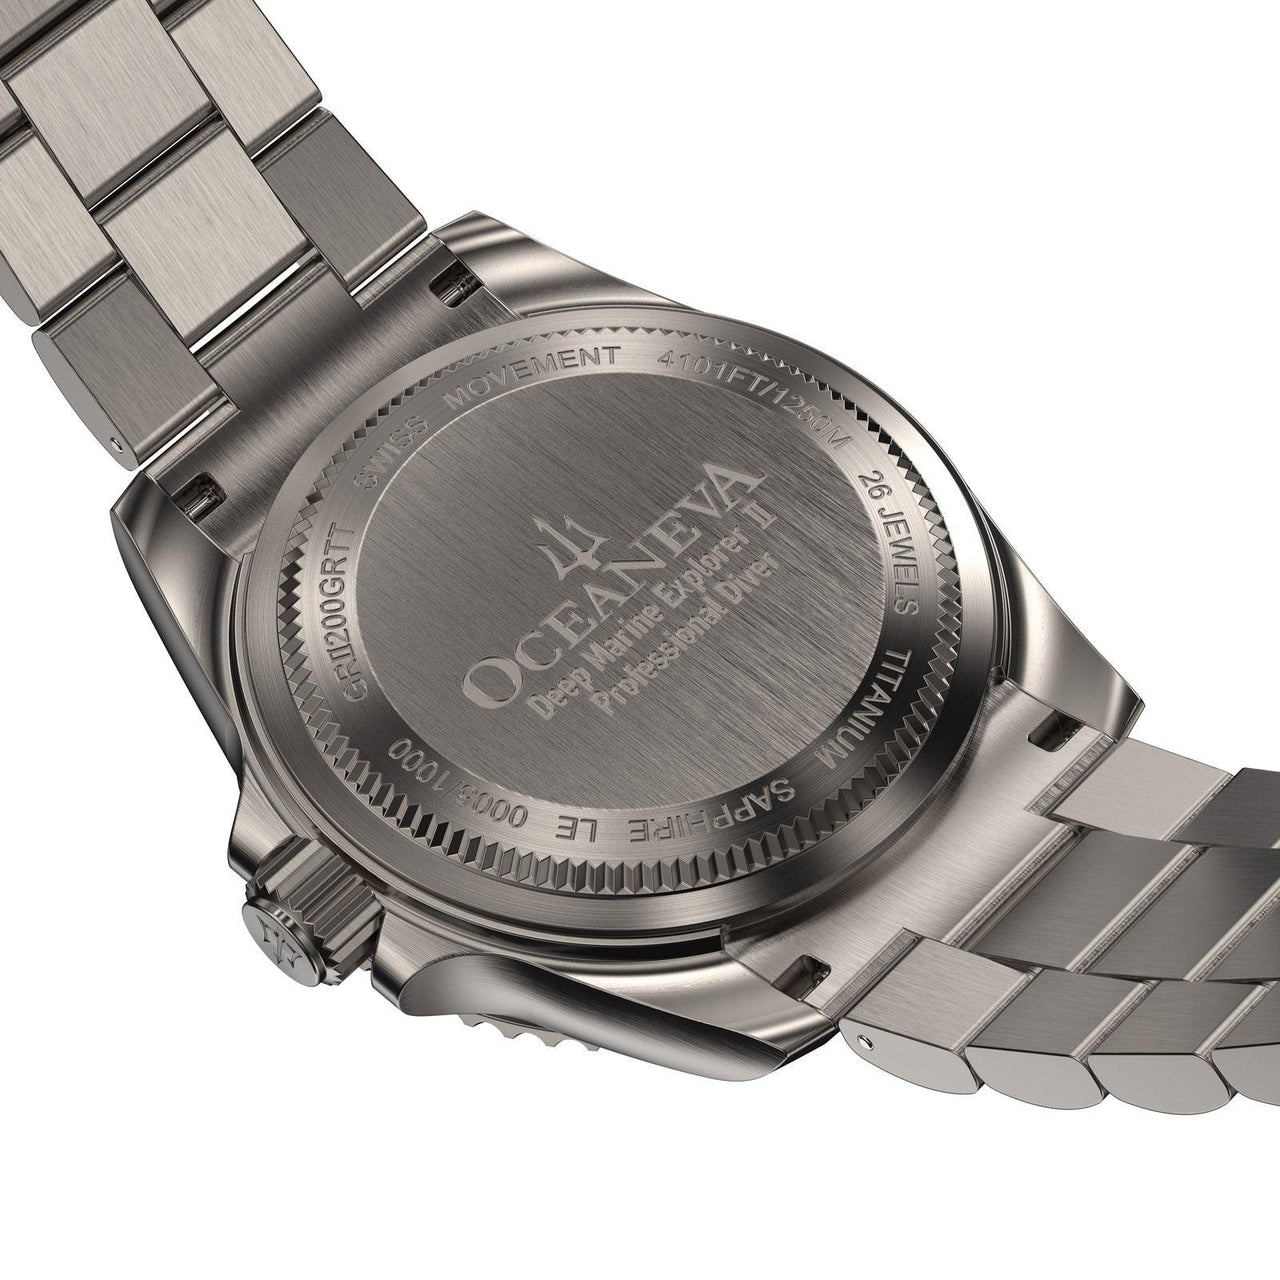 Oceaneva Deep Marine Explorer II Titanium Limited Edition - Green Dial - GRII200GRTT Automatic watches, Green dial watch, mens titanium watch, Titanium Watch, titanium watches for men